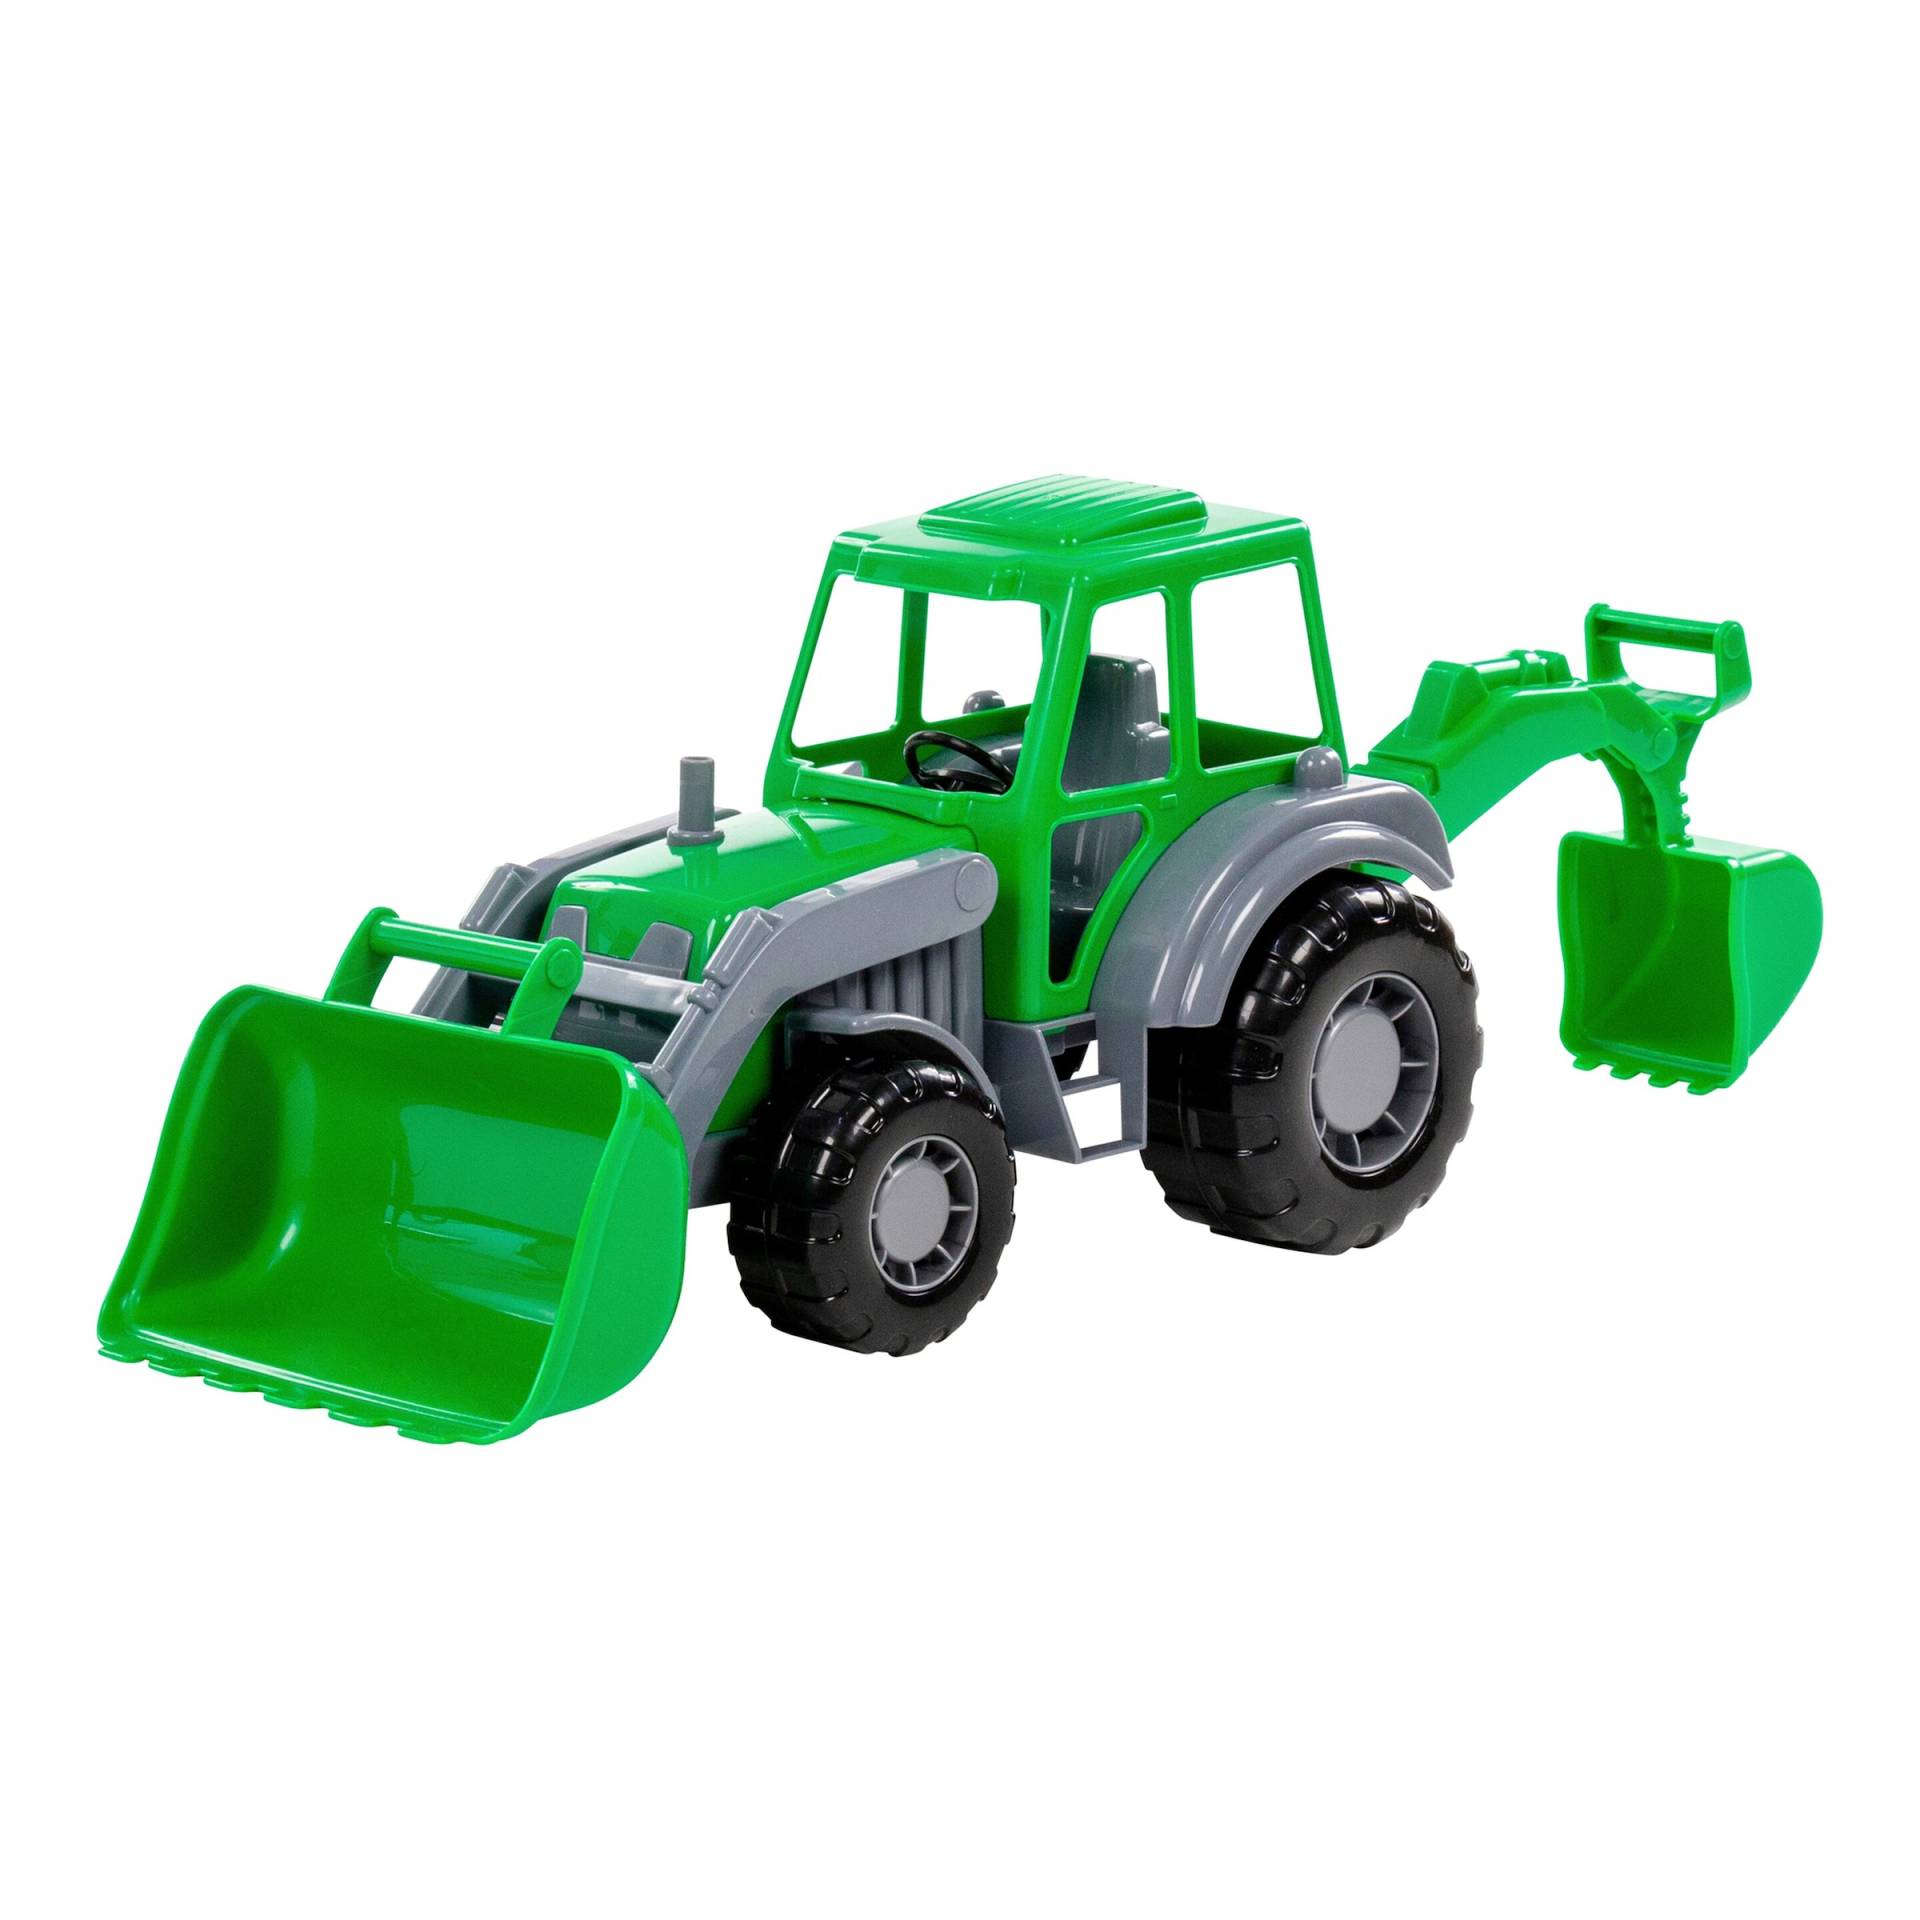 Solini Traktor mit Heckbagger von solini